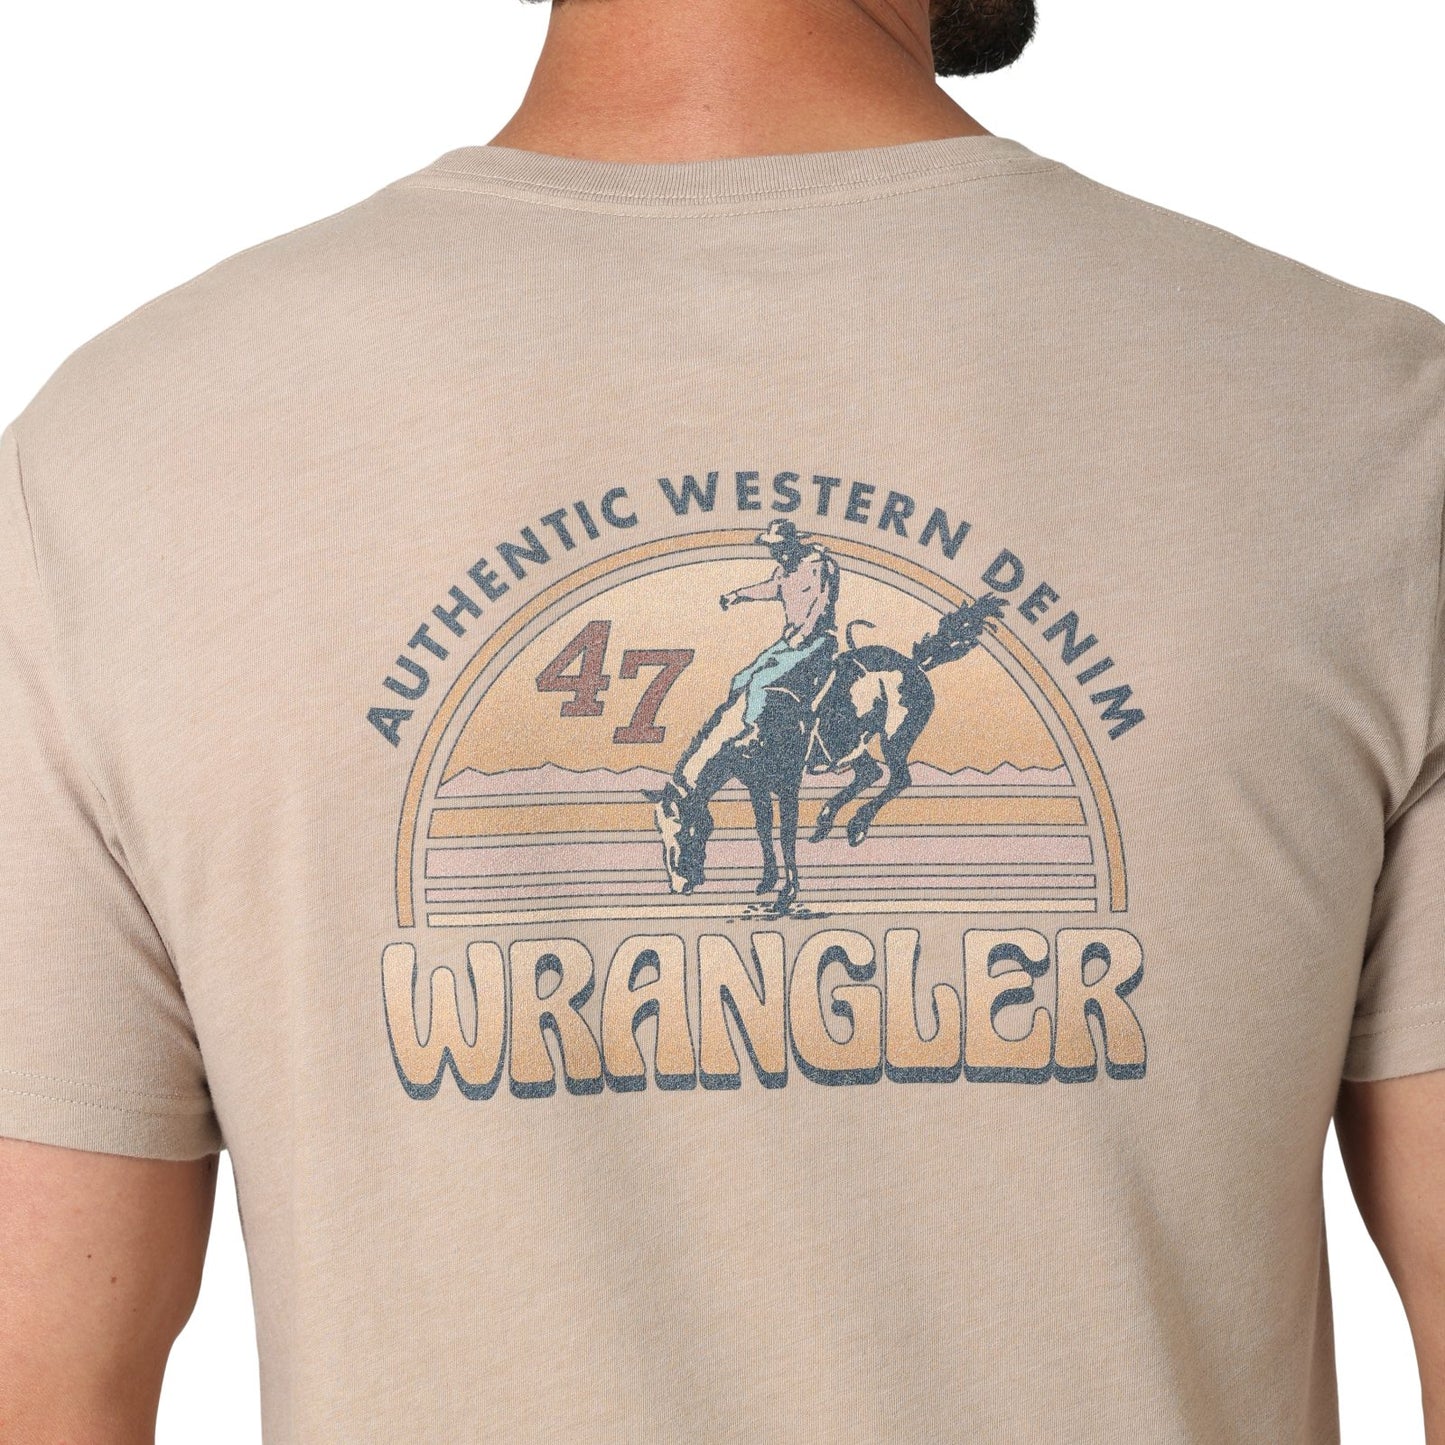 Wrangler Back Graphic Trench Coat Heather T-Shirt